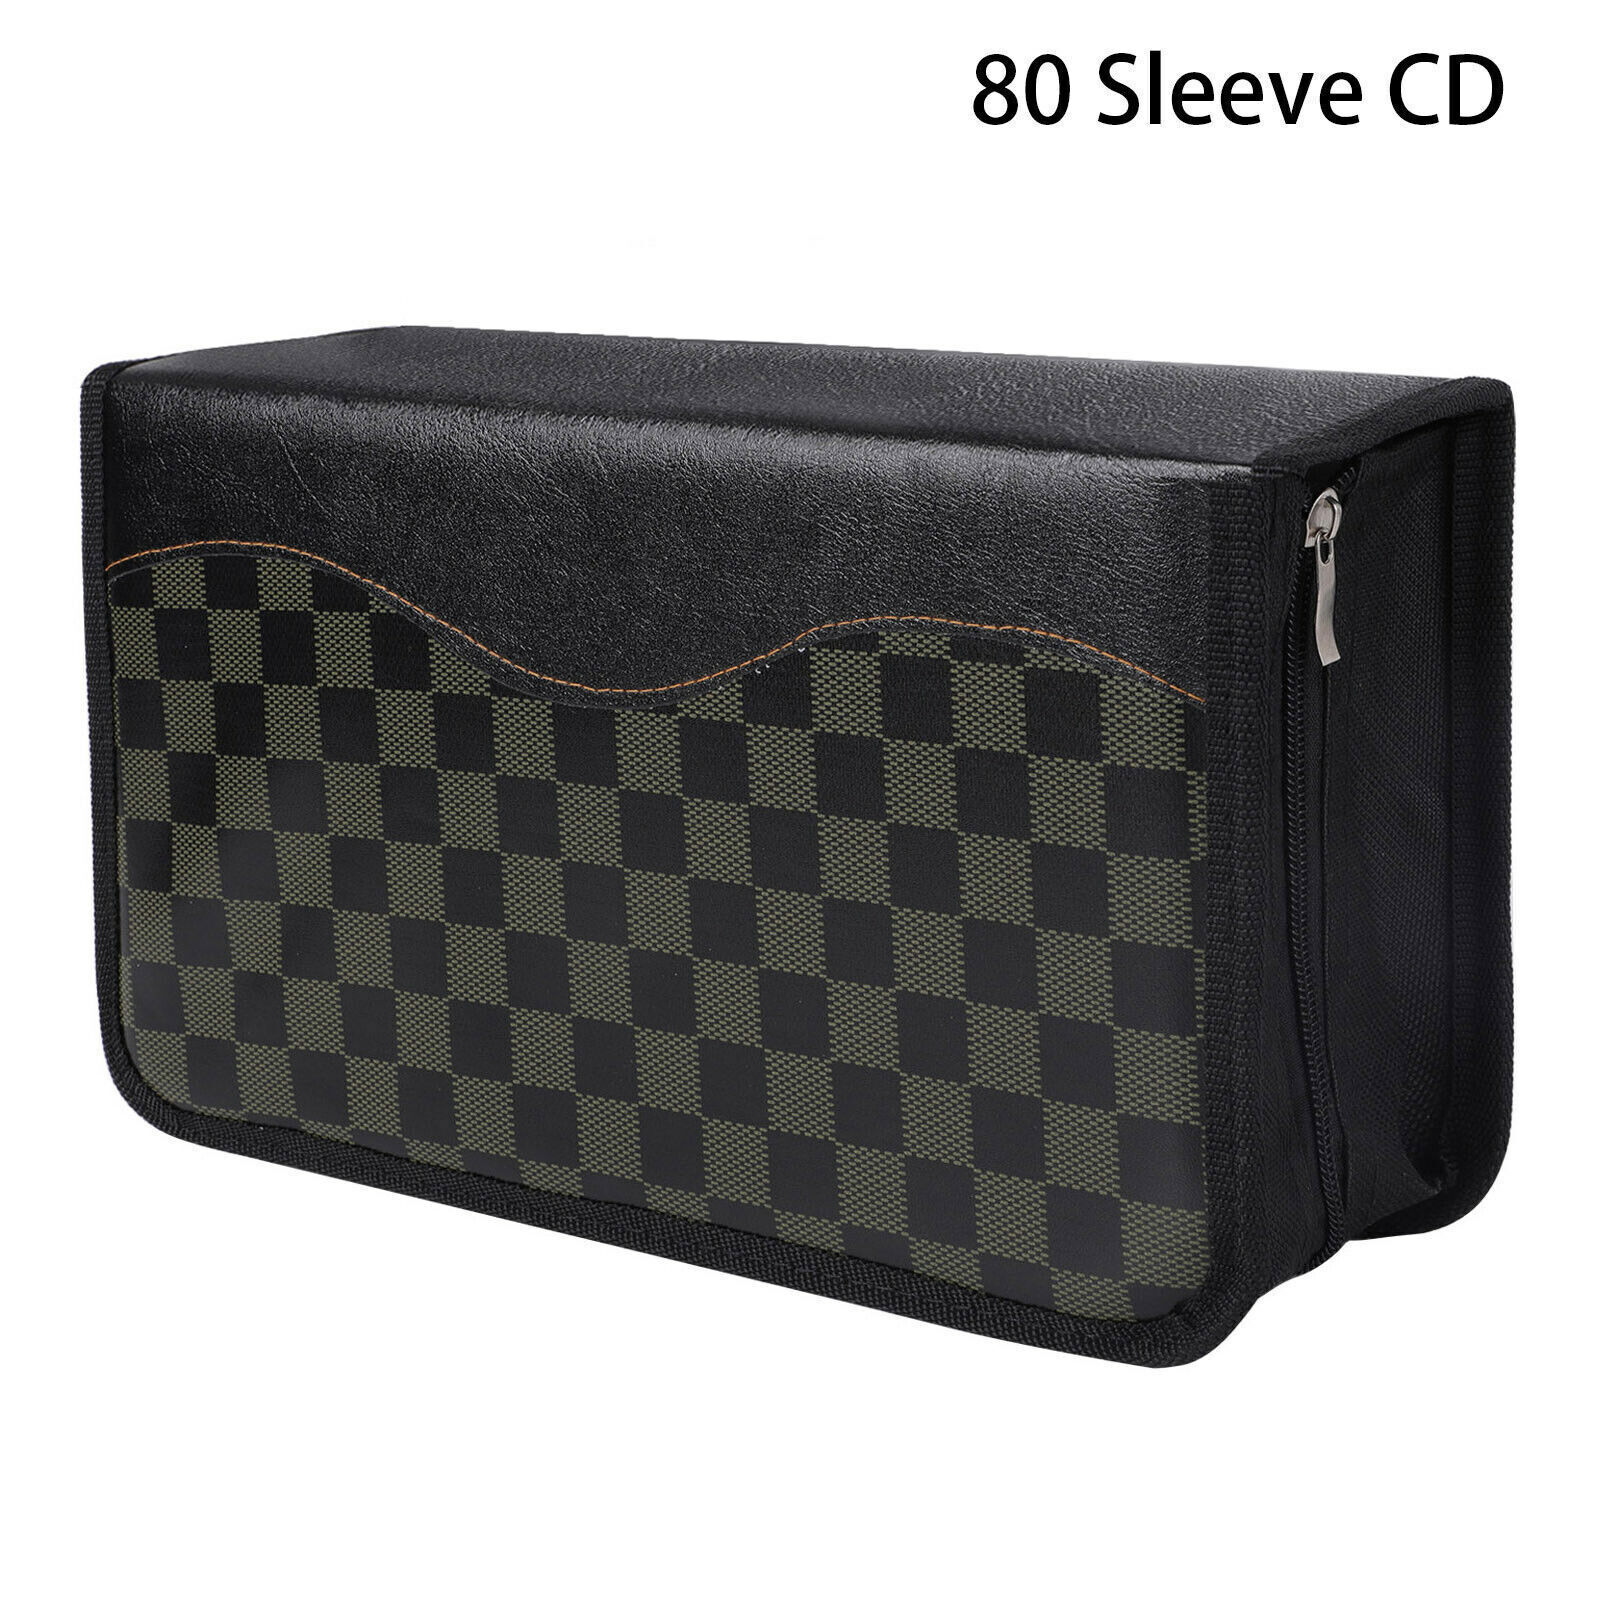 80 Sleeve CD DVD Blu Ray Disc Carry Case Bag Holder Wallet Storage Ring Binder